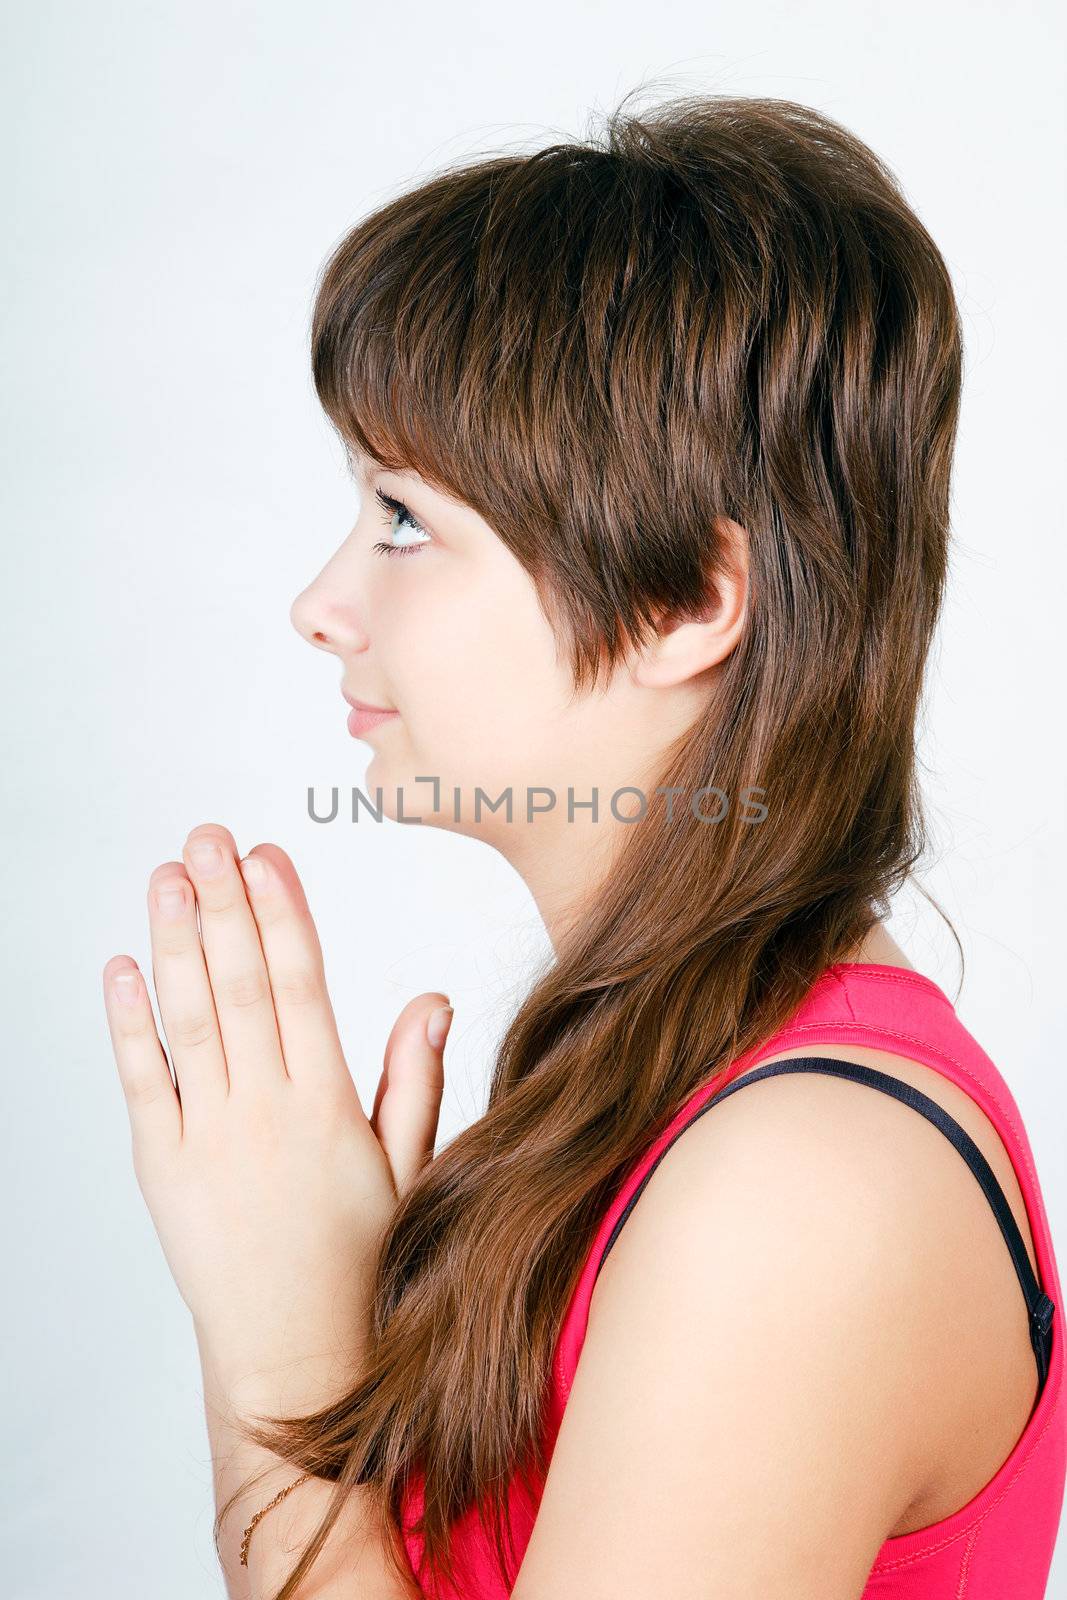 blue-eyed teen girl praying. profile by pzRomashka